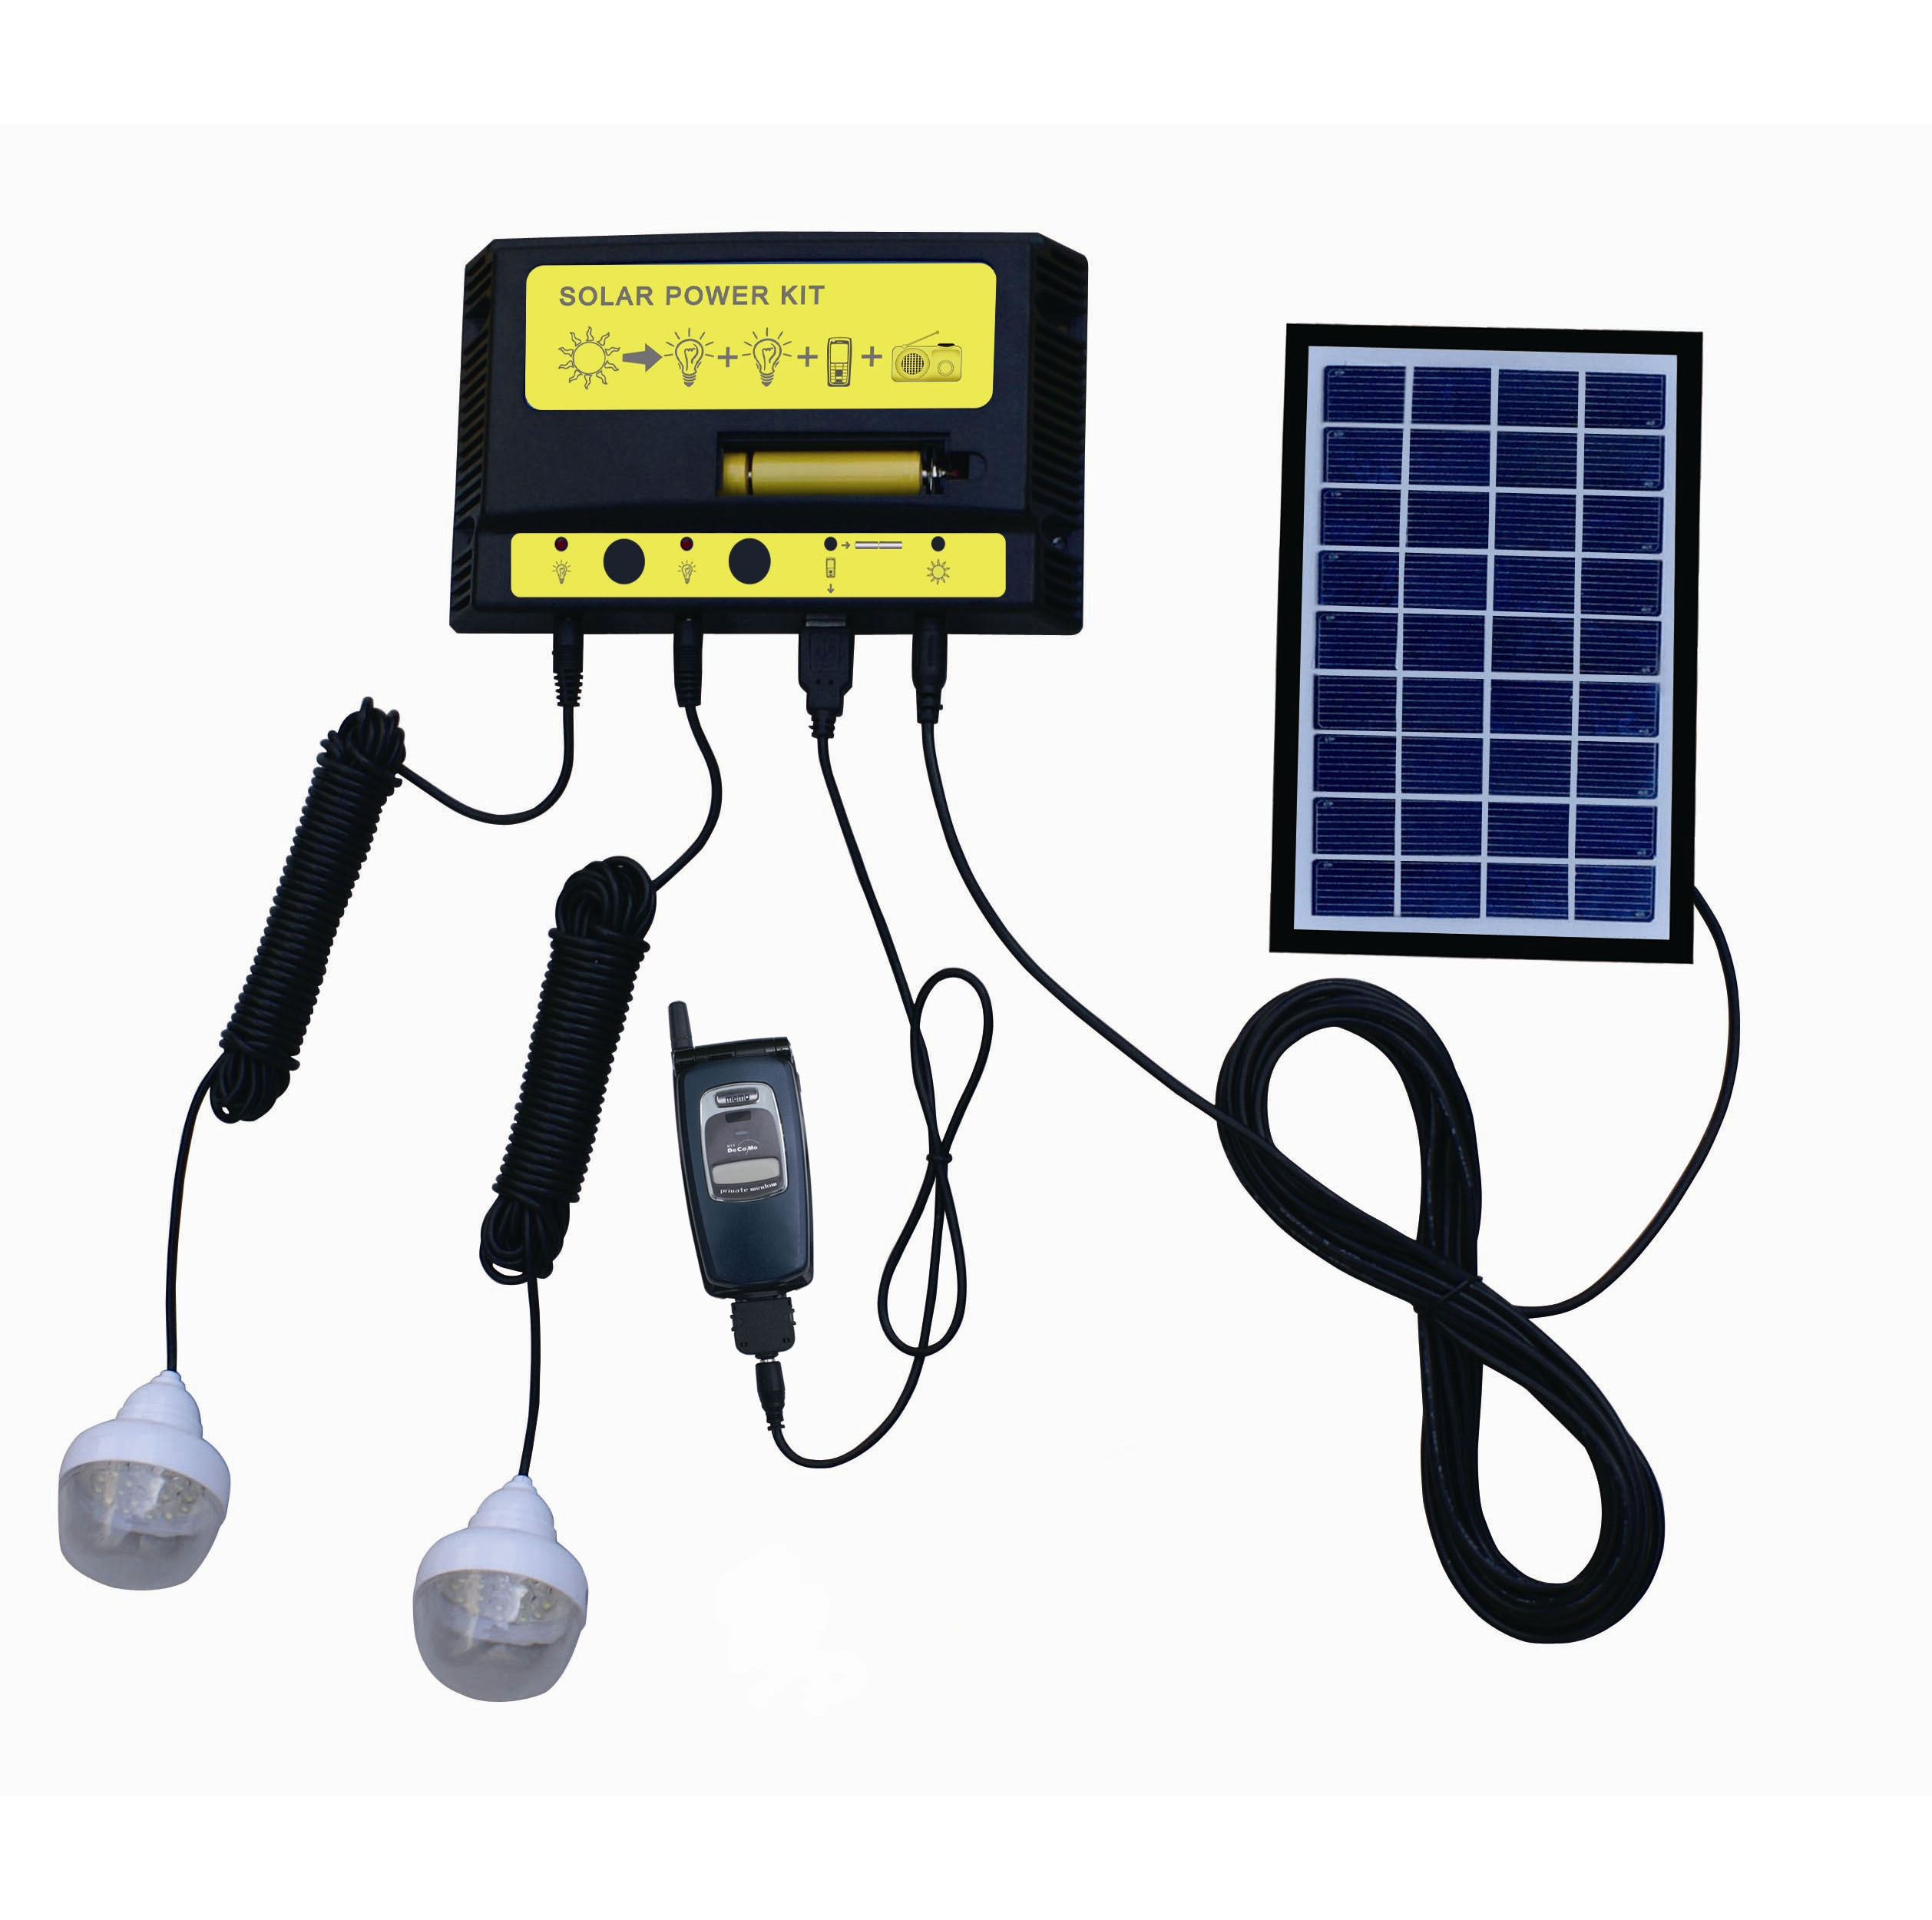 SJ-002-2 Solar power